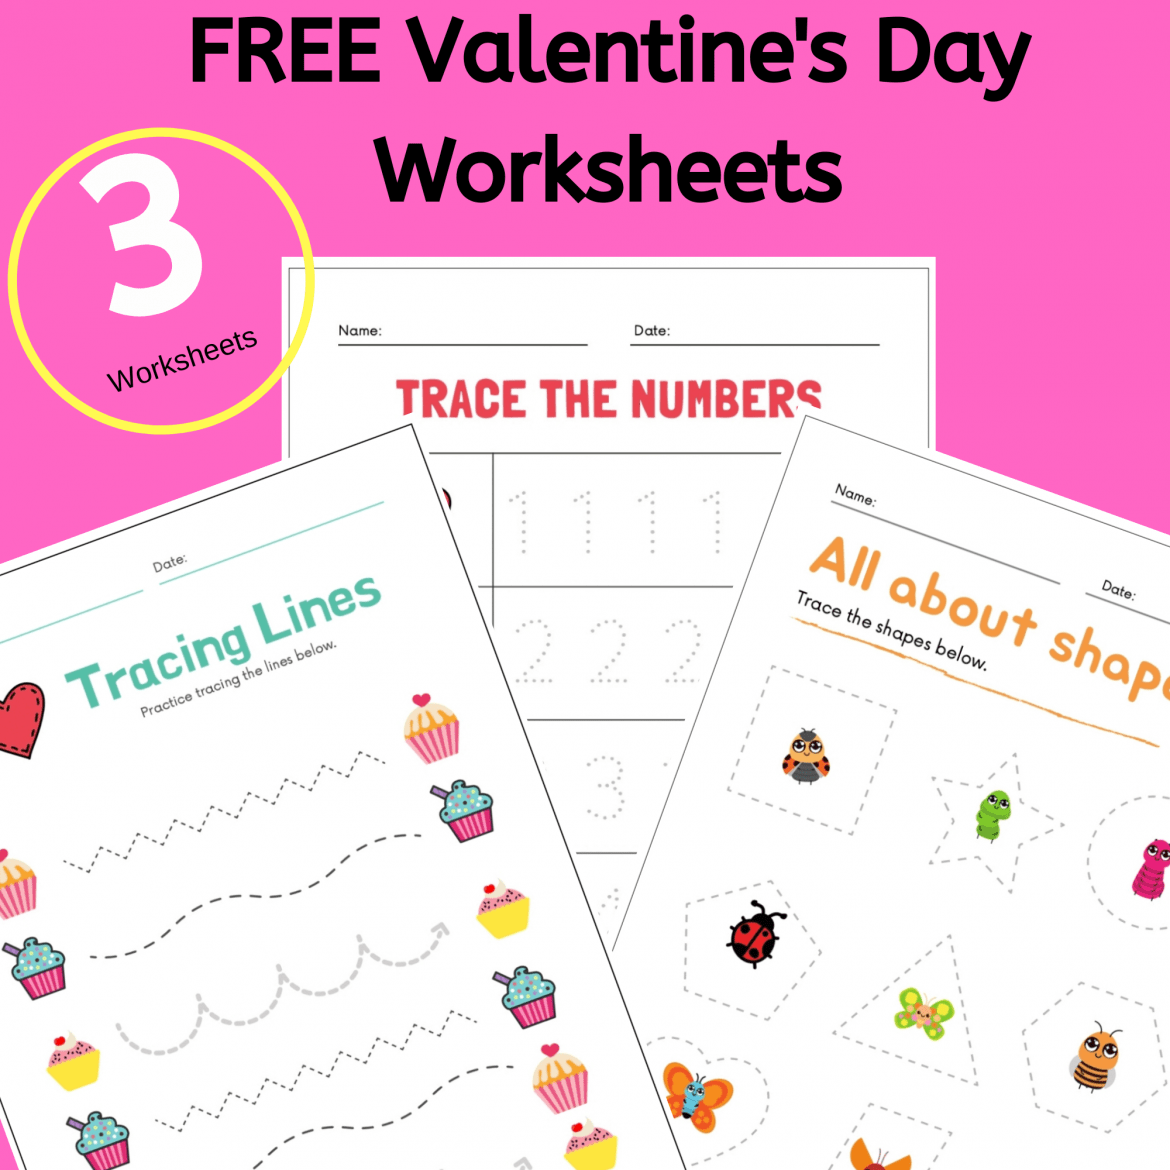 Get 3 Free Printable Valentine Day Worksheets for Preschool